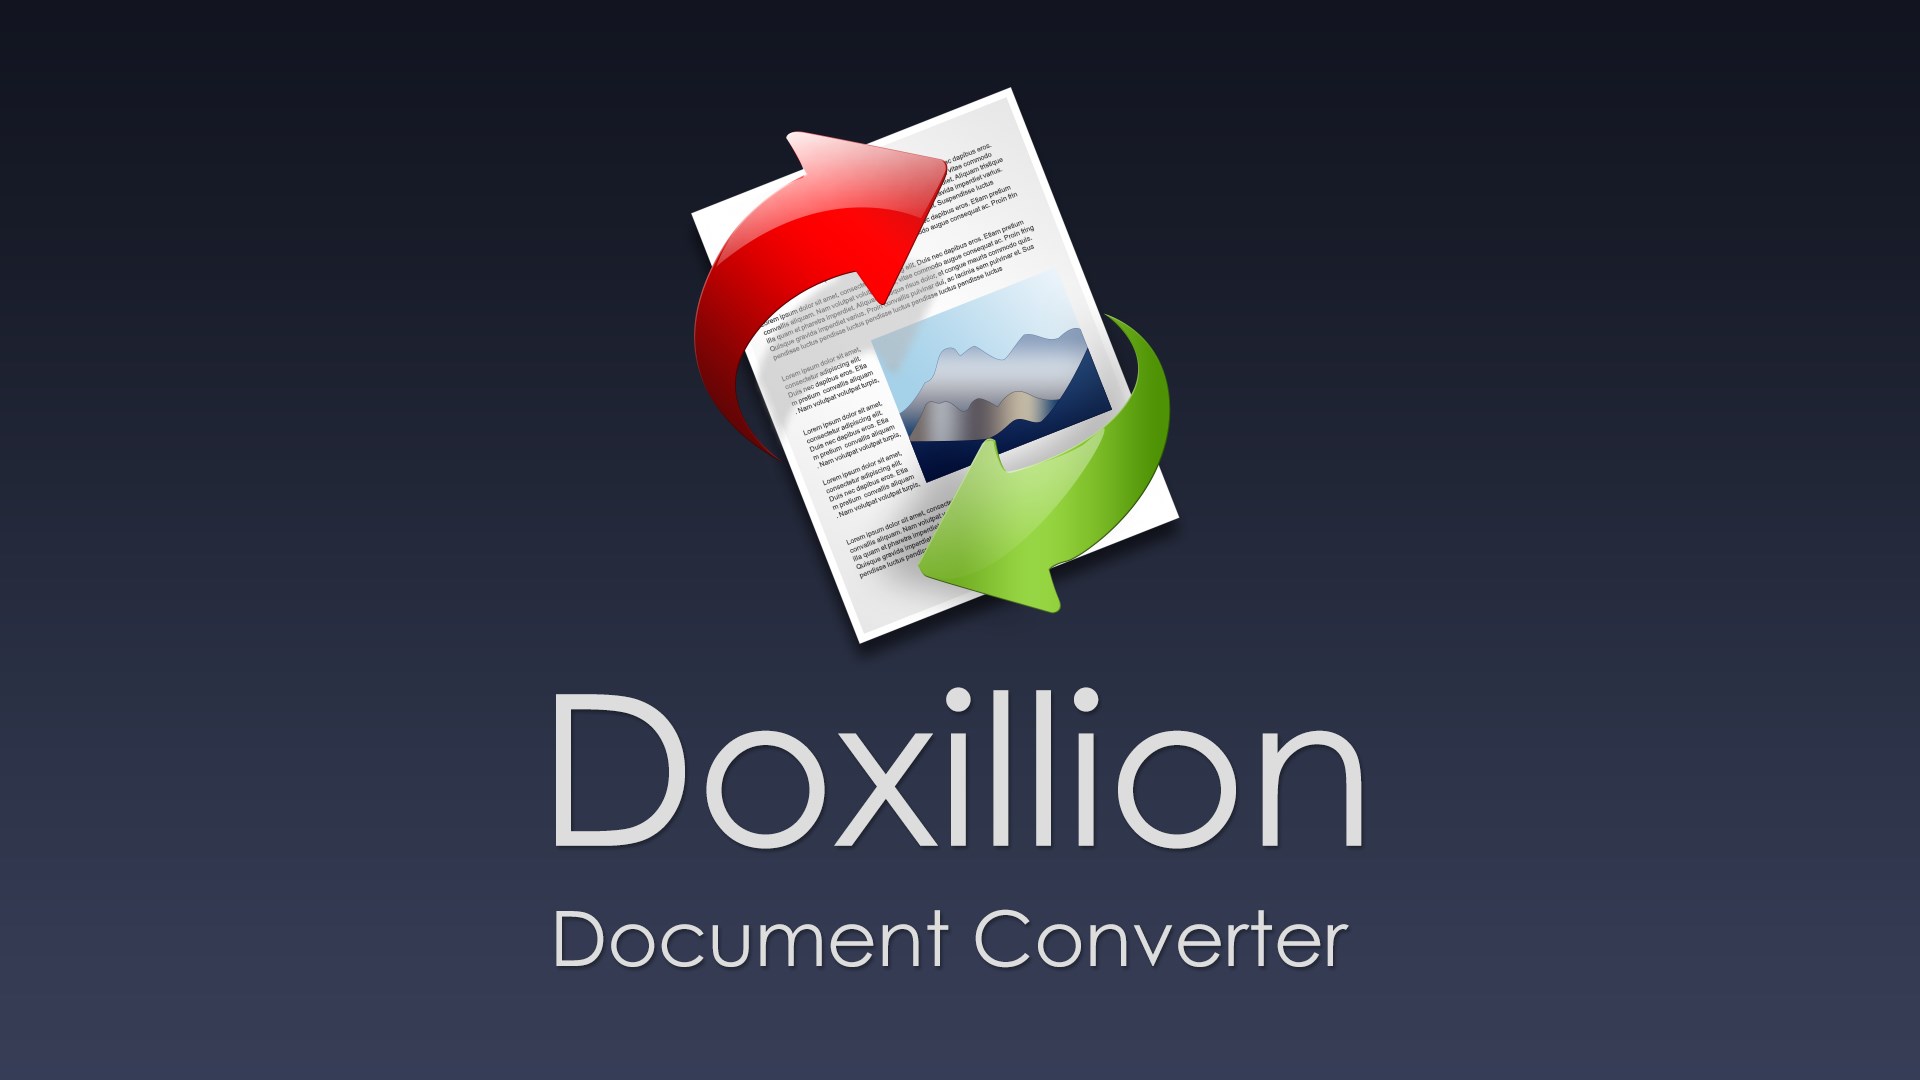 NCH: Doxillion Document Converter Key